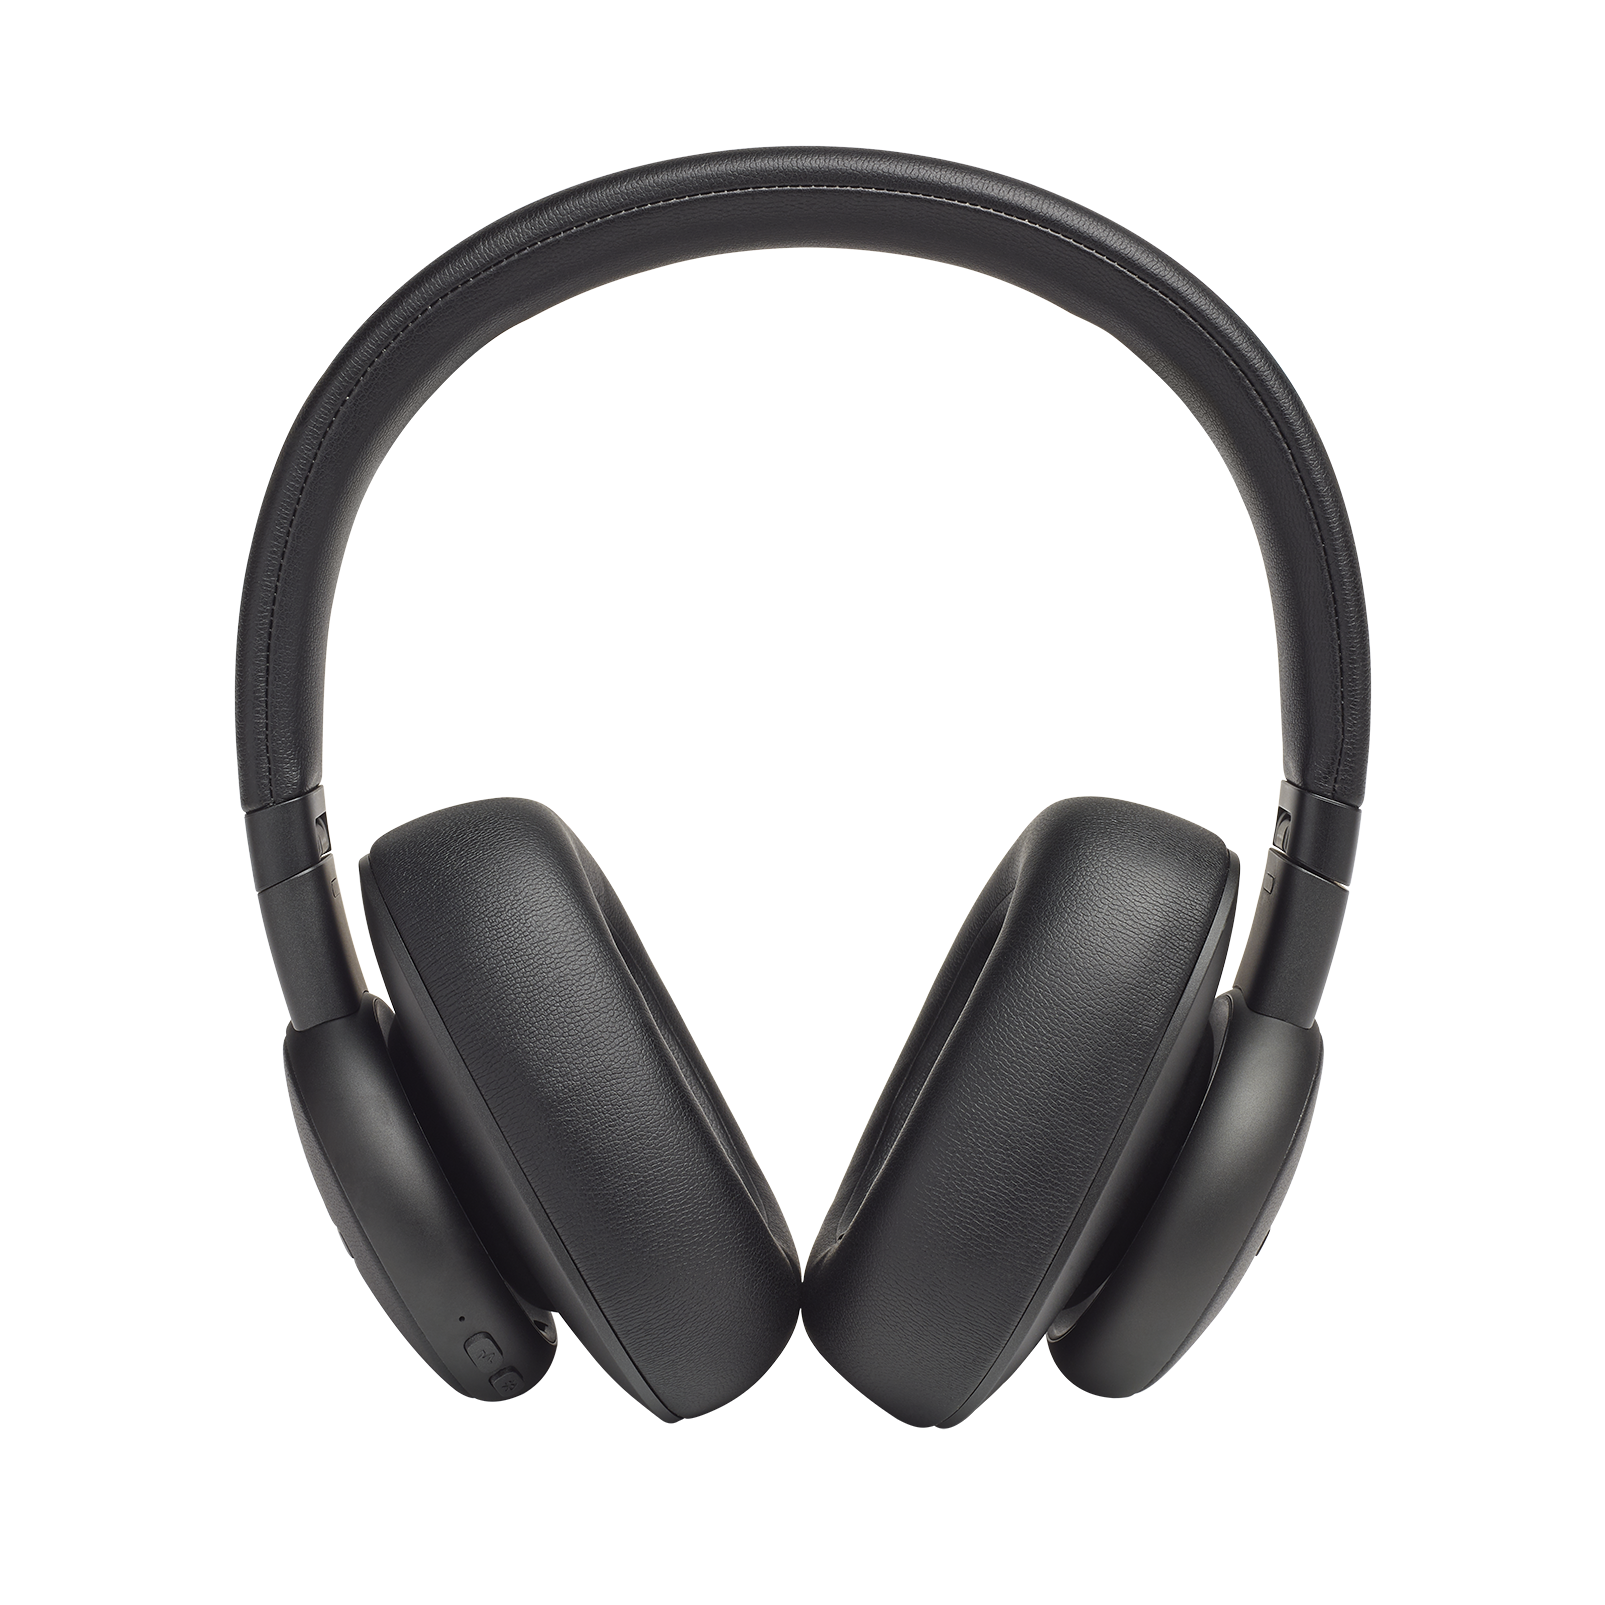 Harman Kardon FLY ANC - Black - Wireless Over-Ear NC Headphones - Front